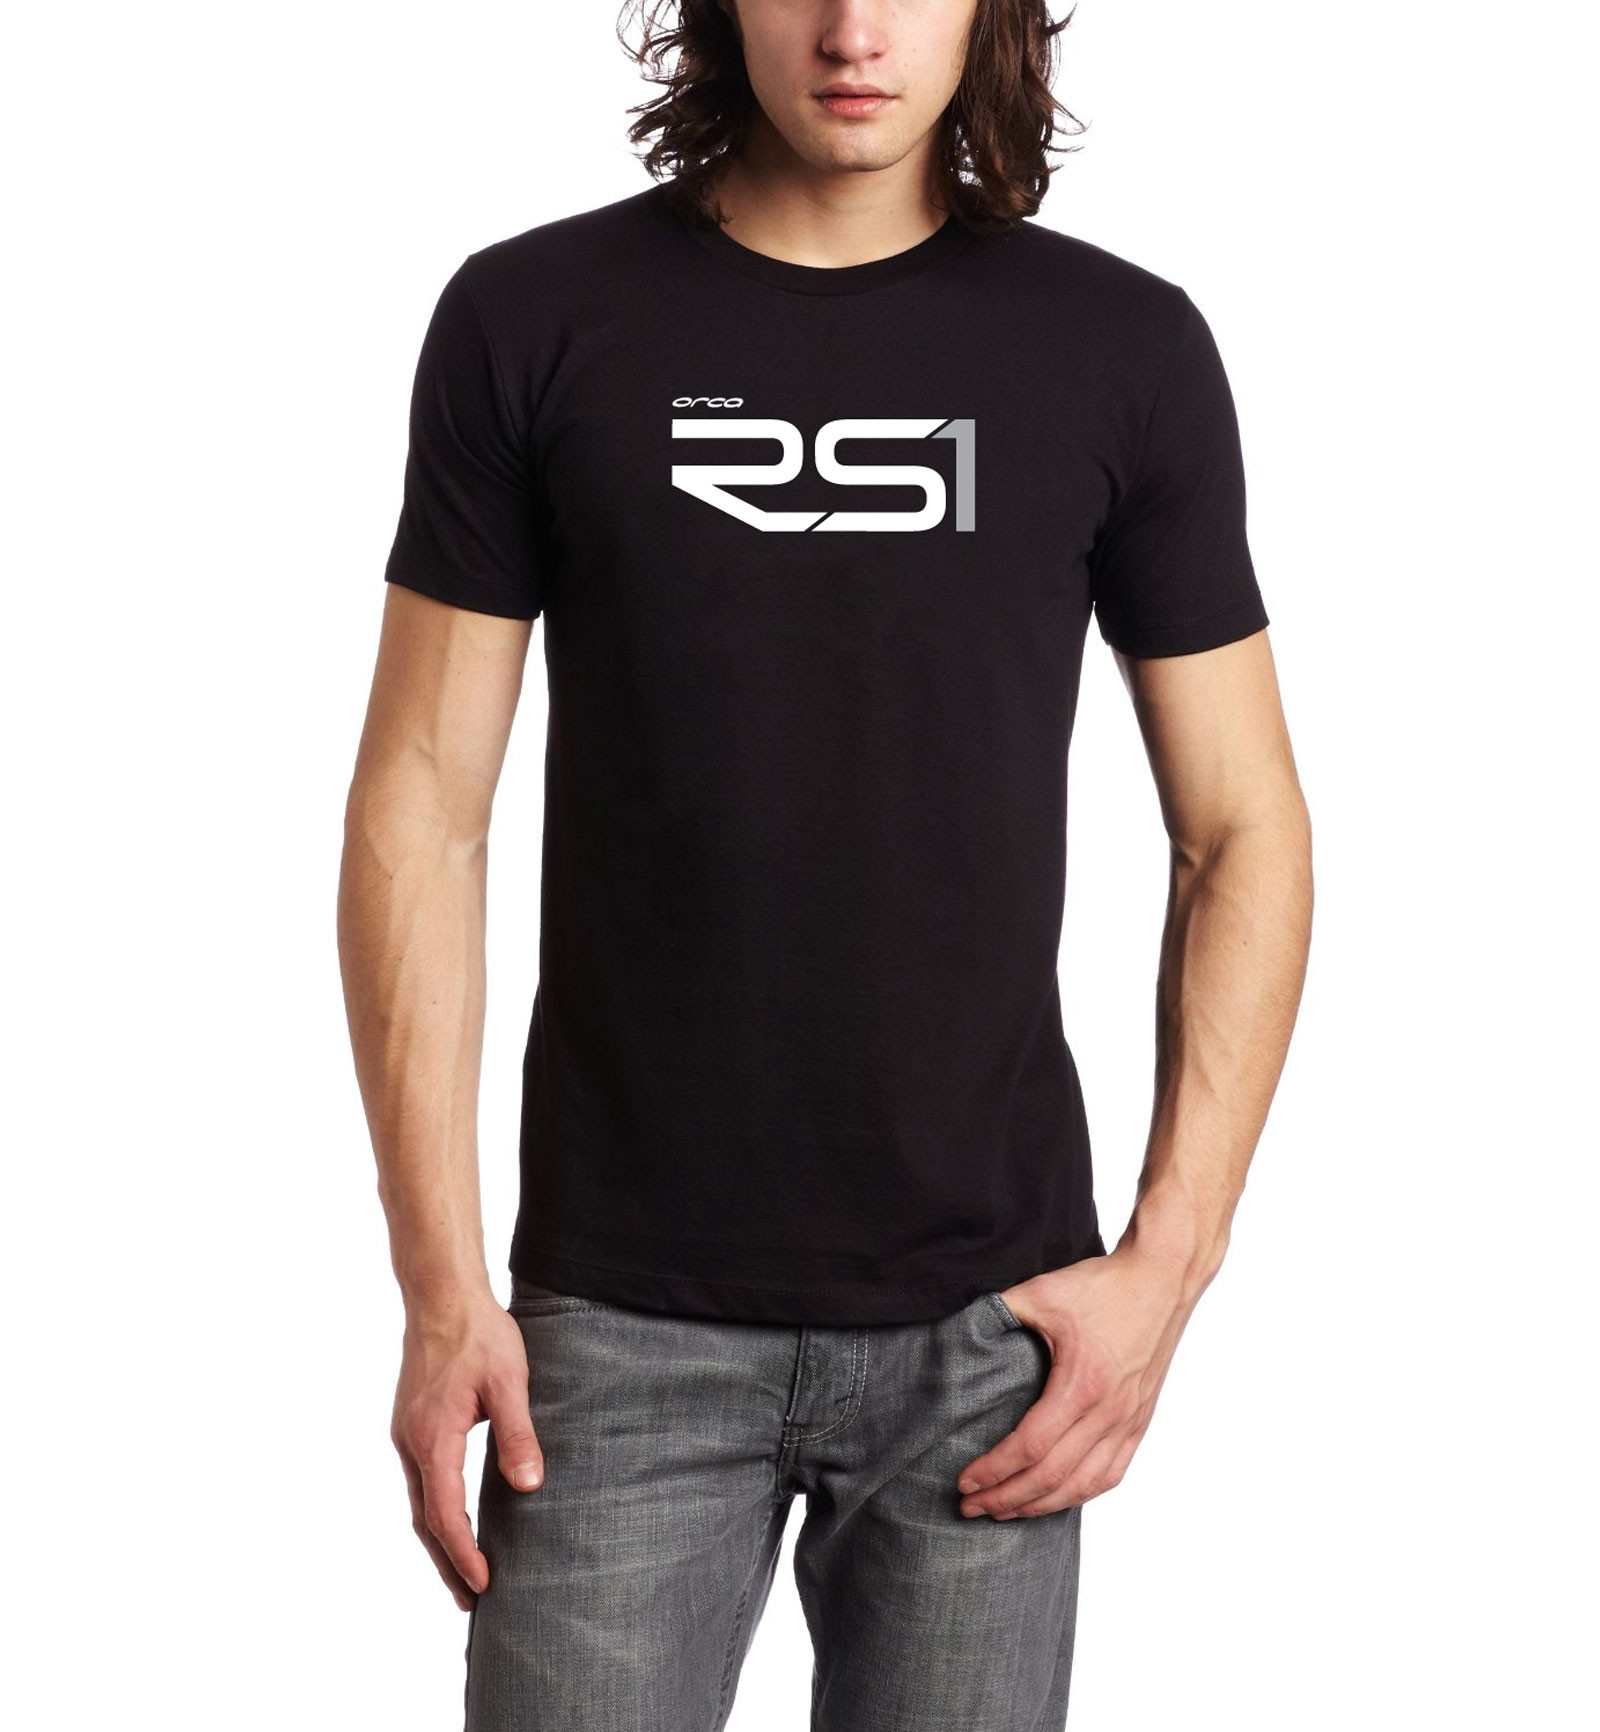 Robertstown-Orca-RS1-T-Shirt